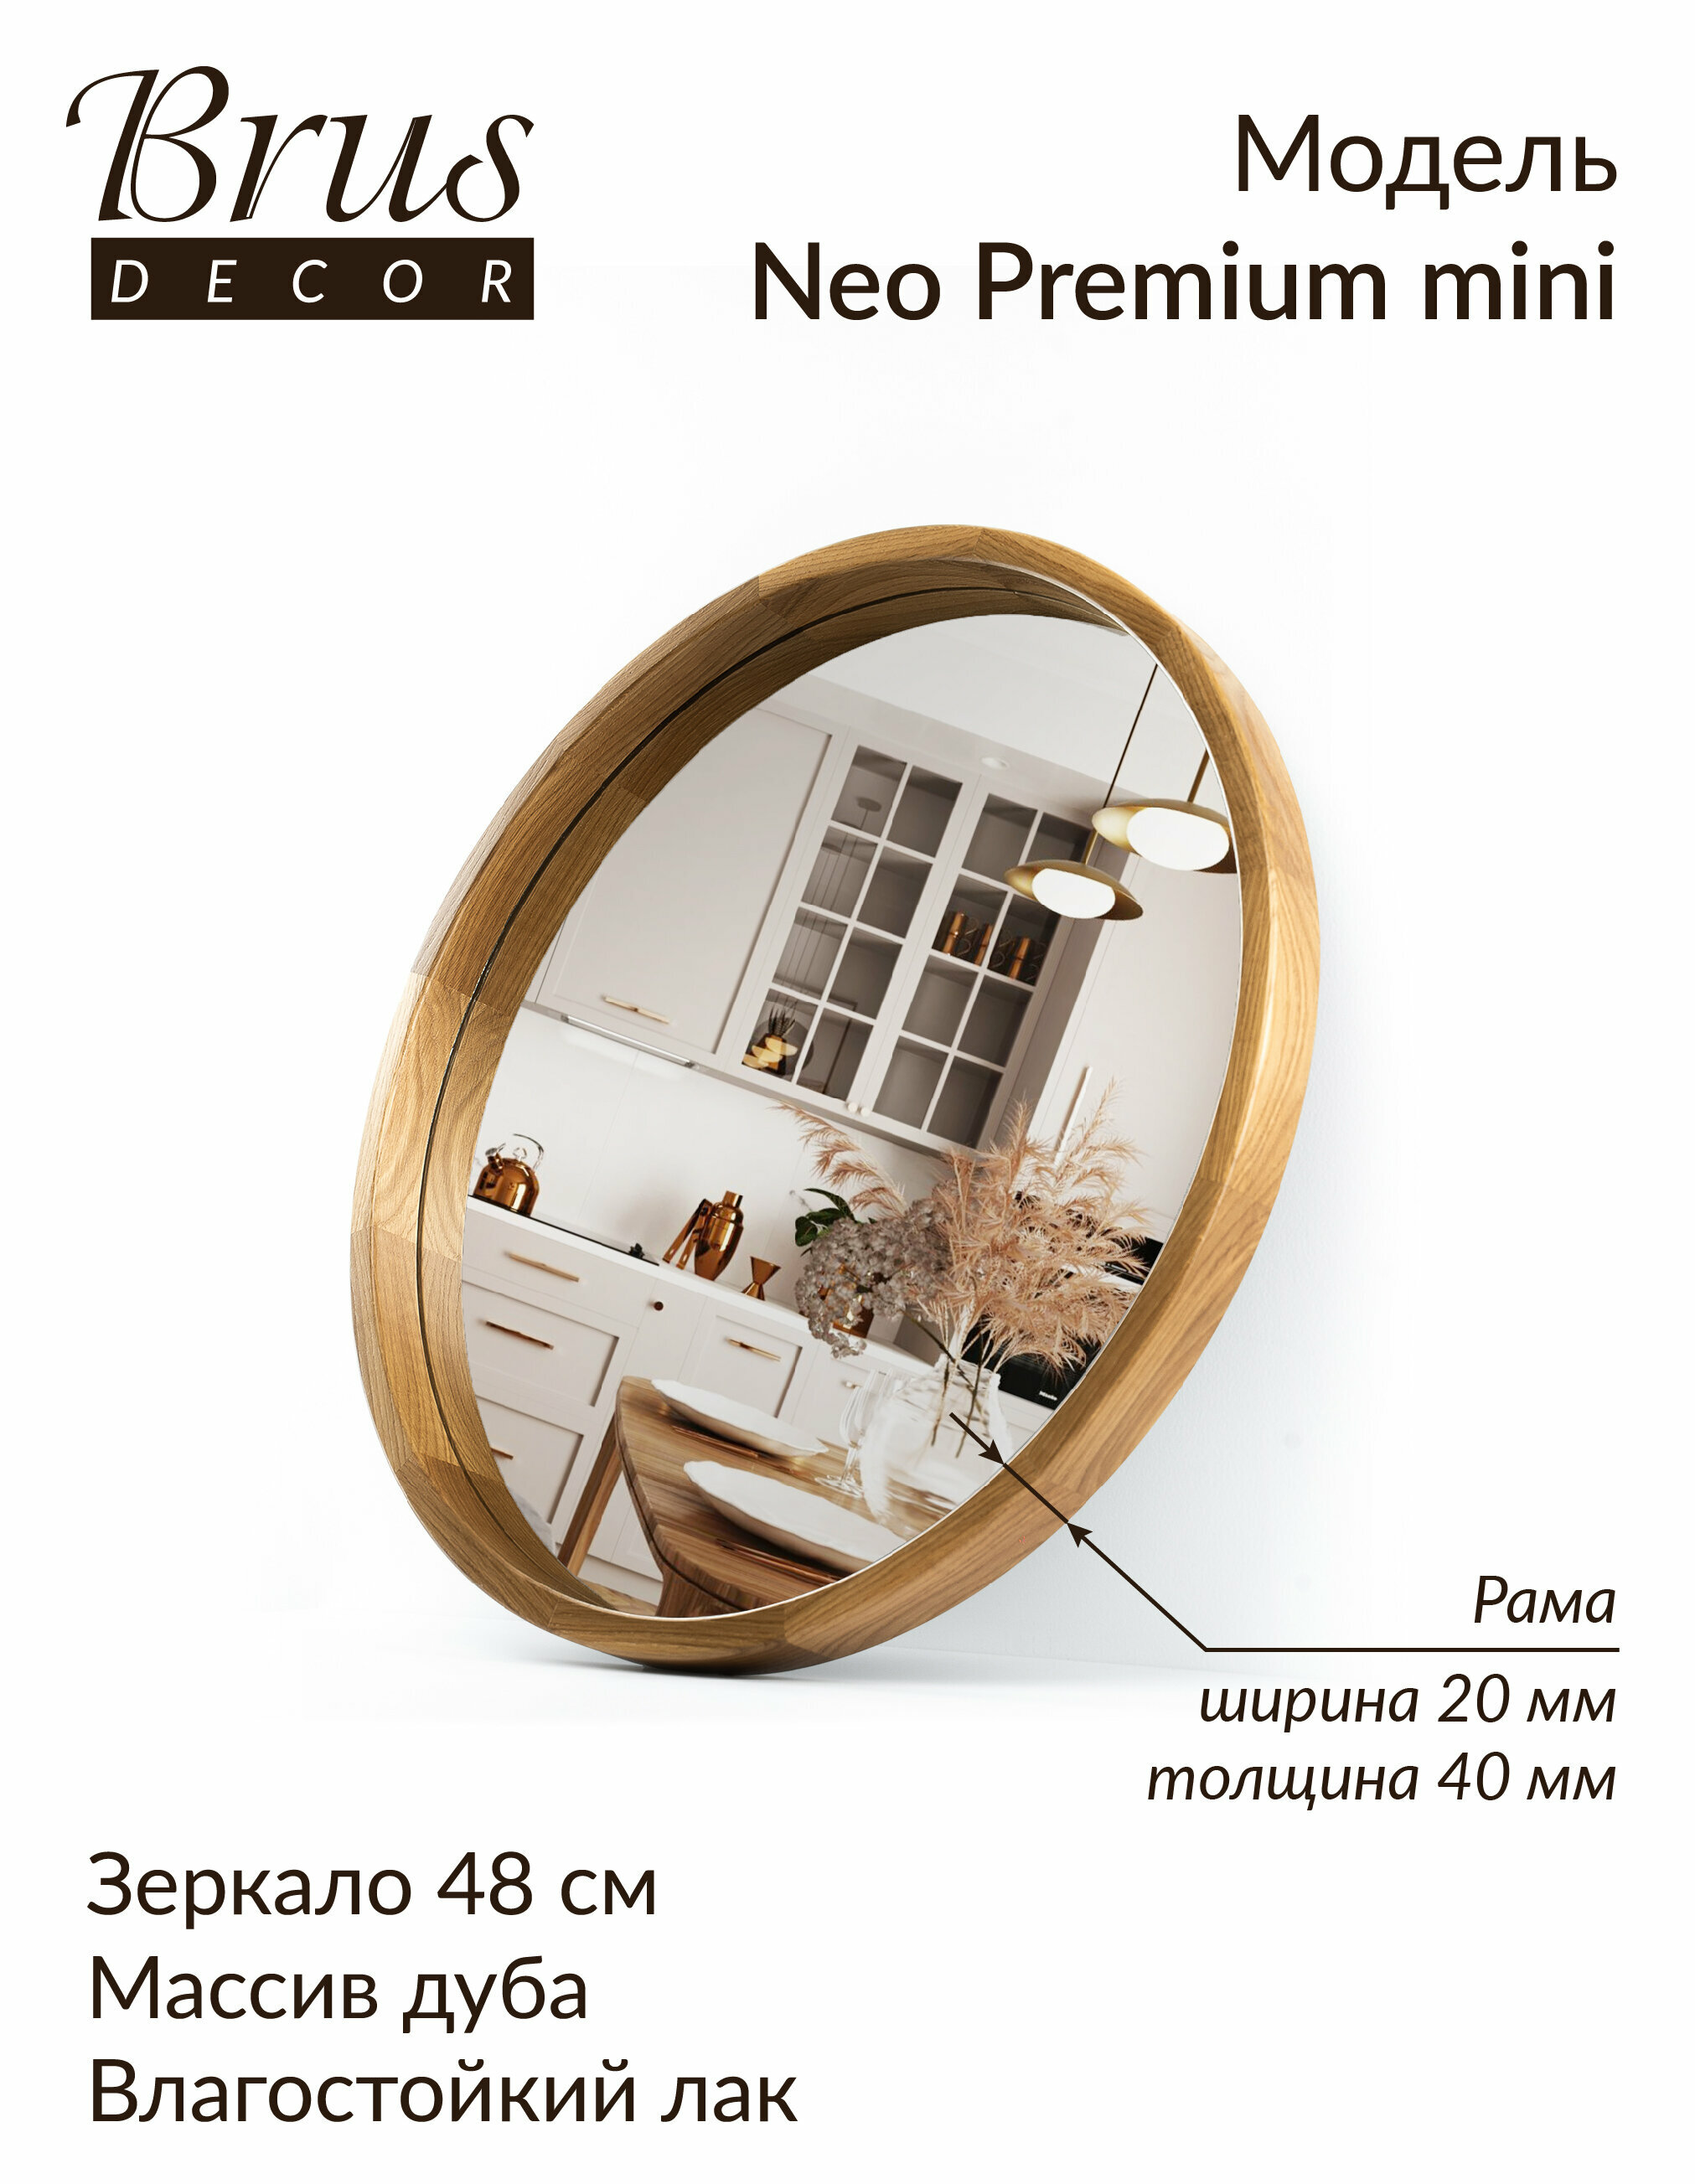 Зеркало интерьерное в круглой раме из Дуба NEO Premium mini 48см - фотография № 1